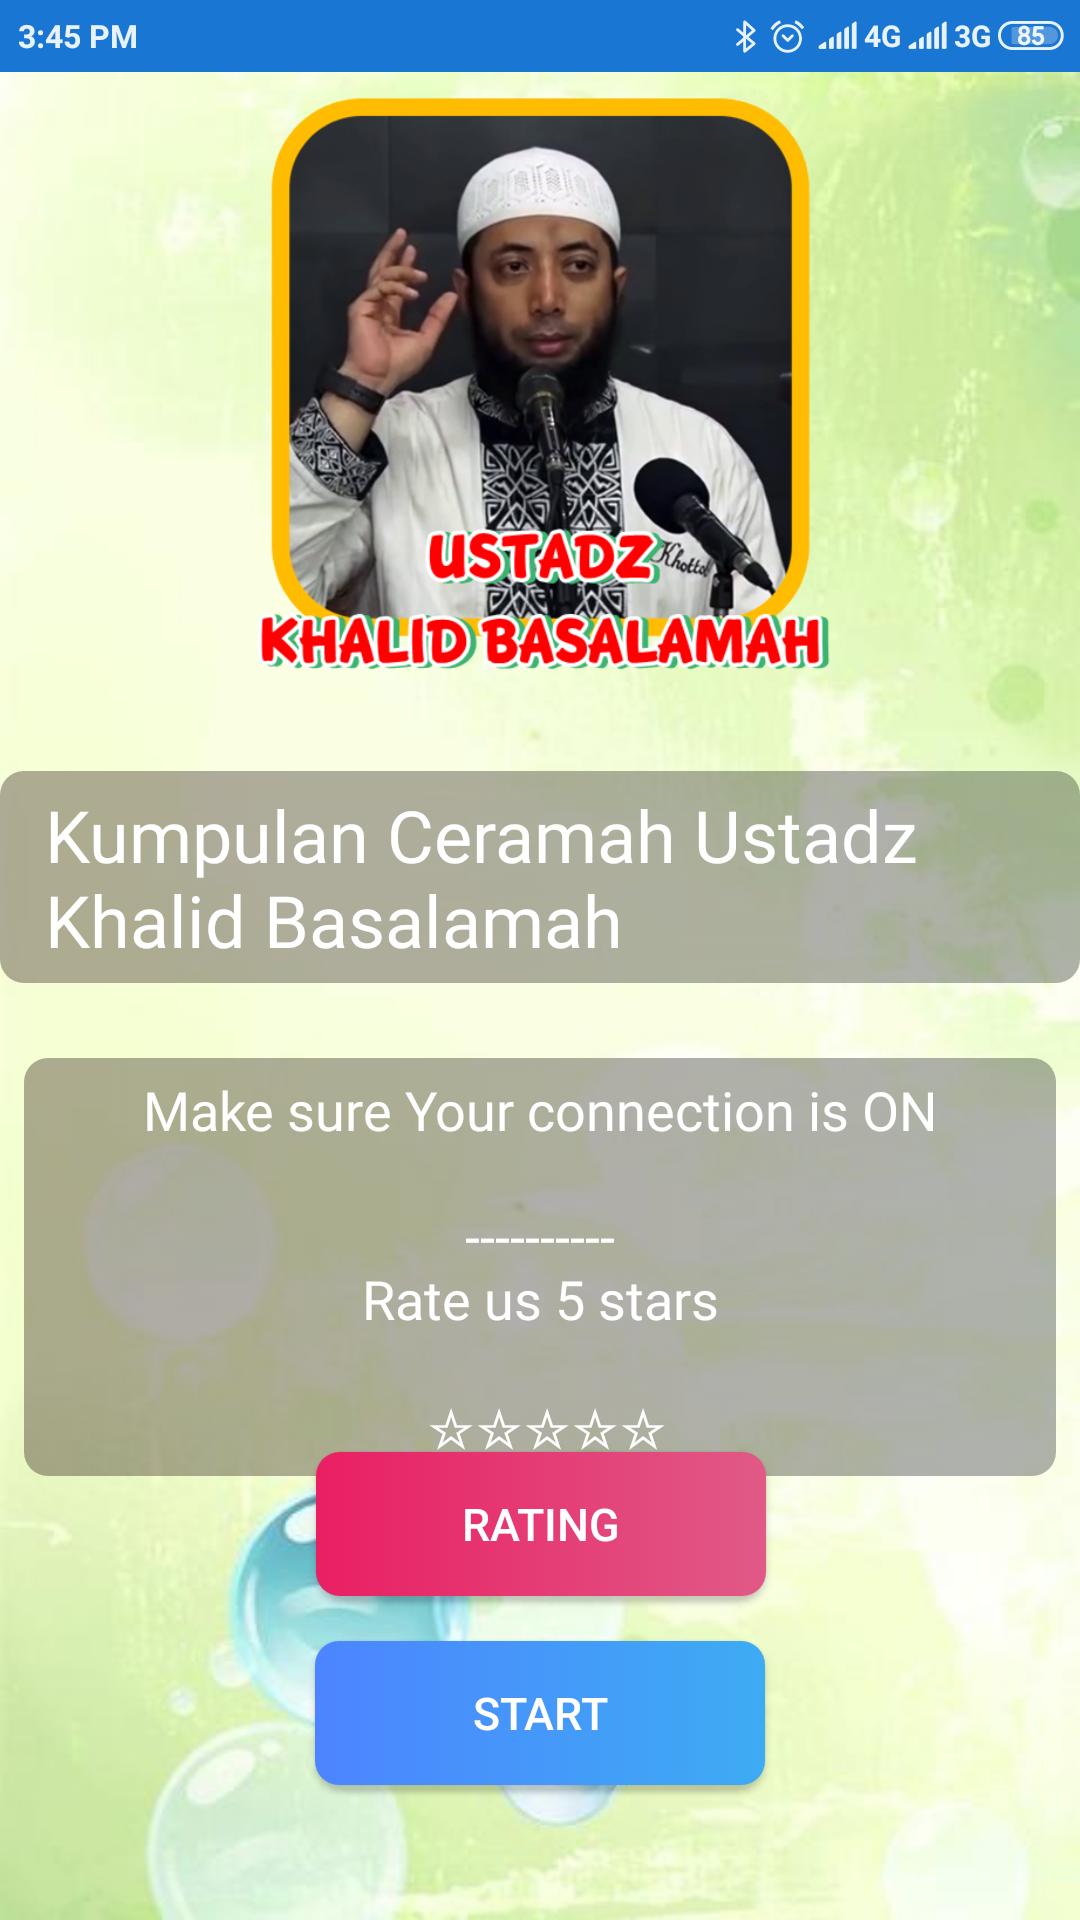 Kumpulan Ceramah Ustadz Khalid Basalamah For Android Apk Download